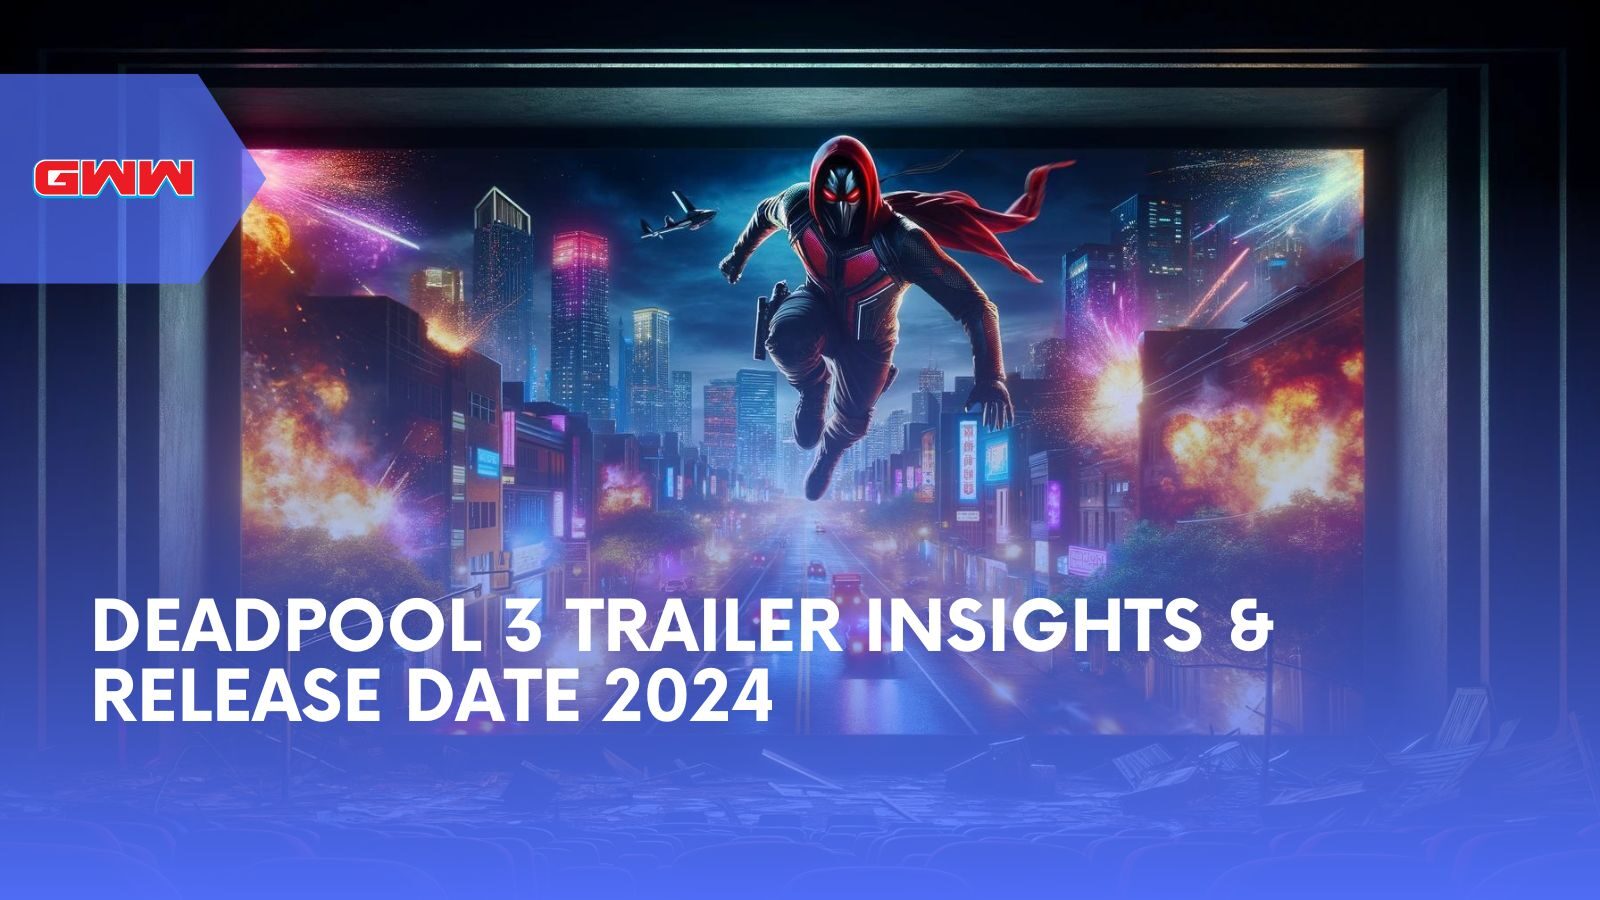 Deadpool 3 Trailer Insights & Release Date 2024